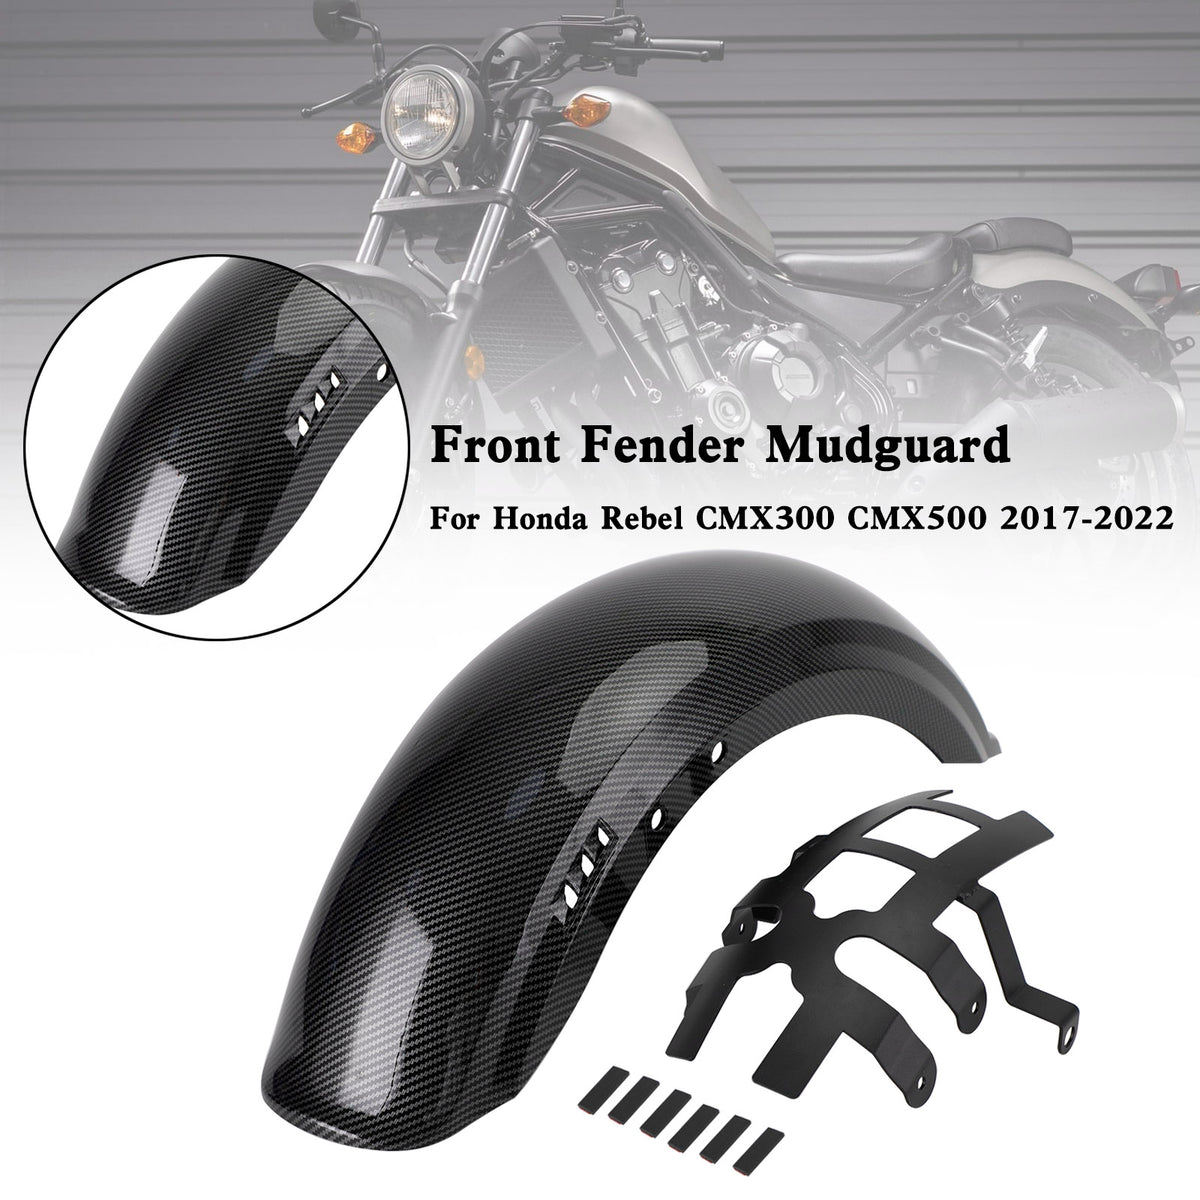 Front Fender Mudguard Fairing For Honda Rebel CMX300 CMX500 2017-2022